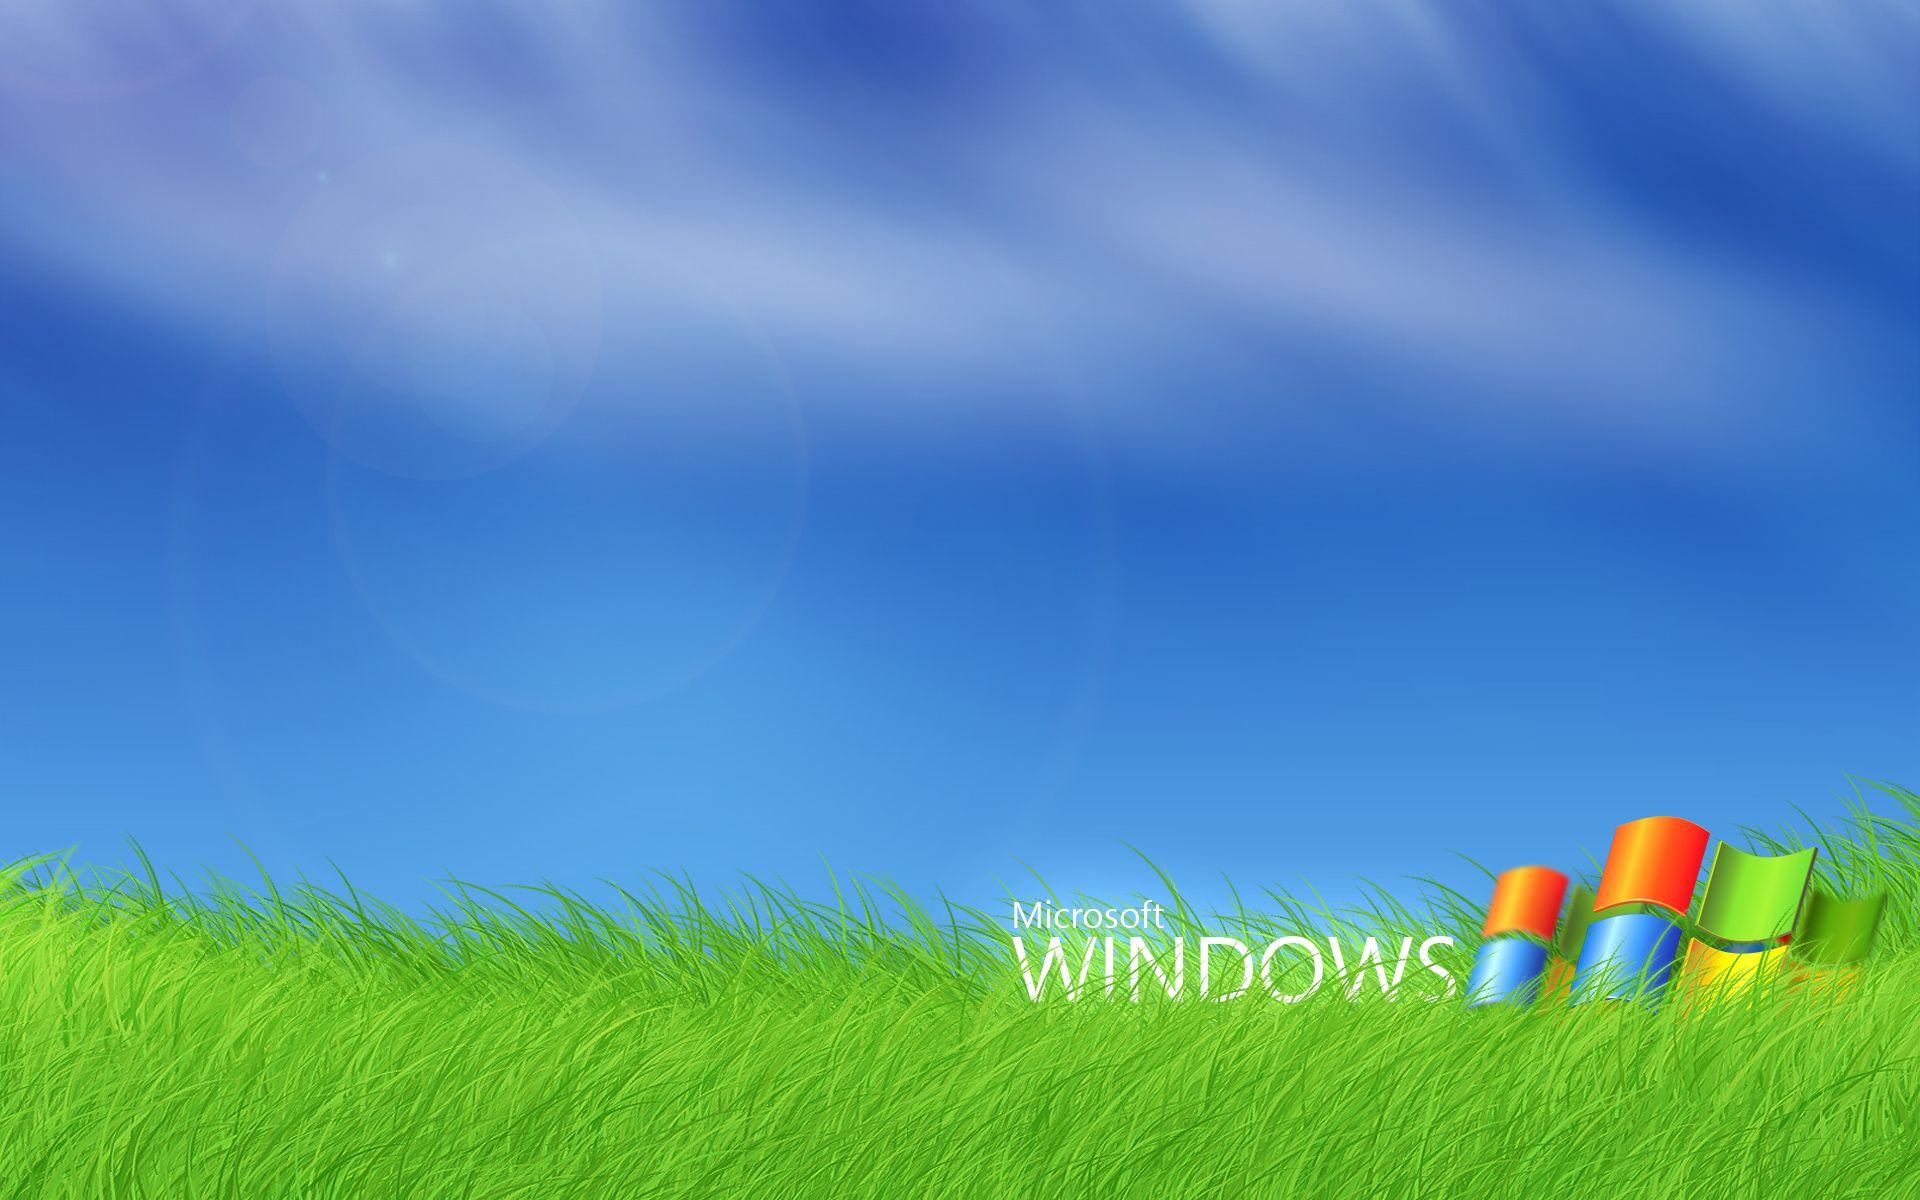 Windows Computer Wallpapers - Top Free ...